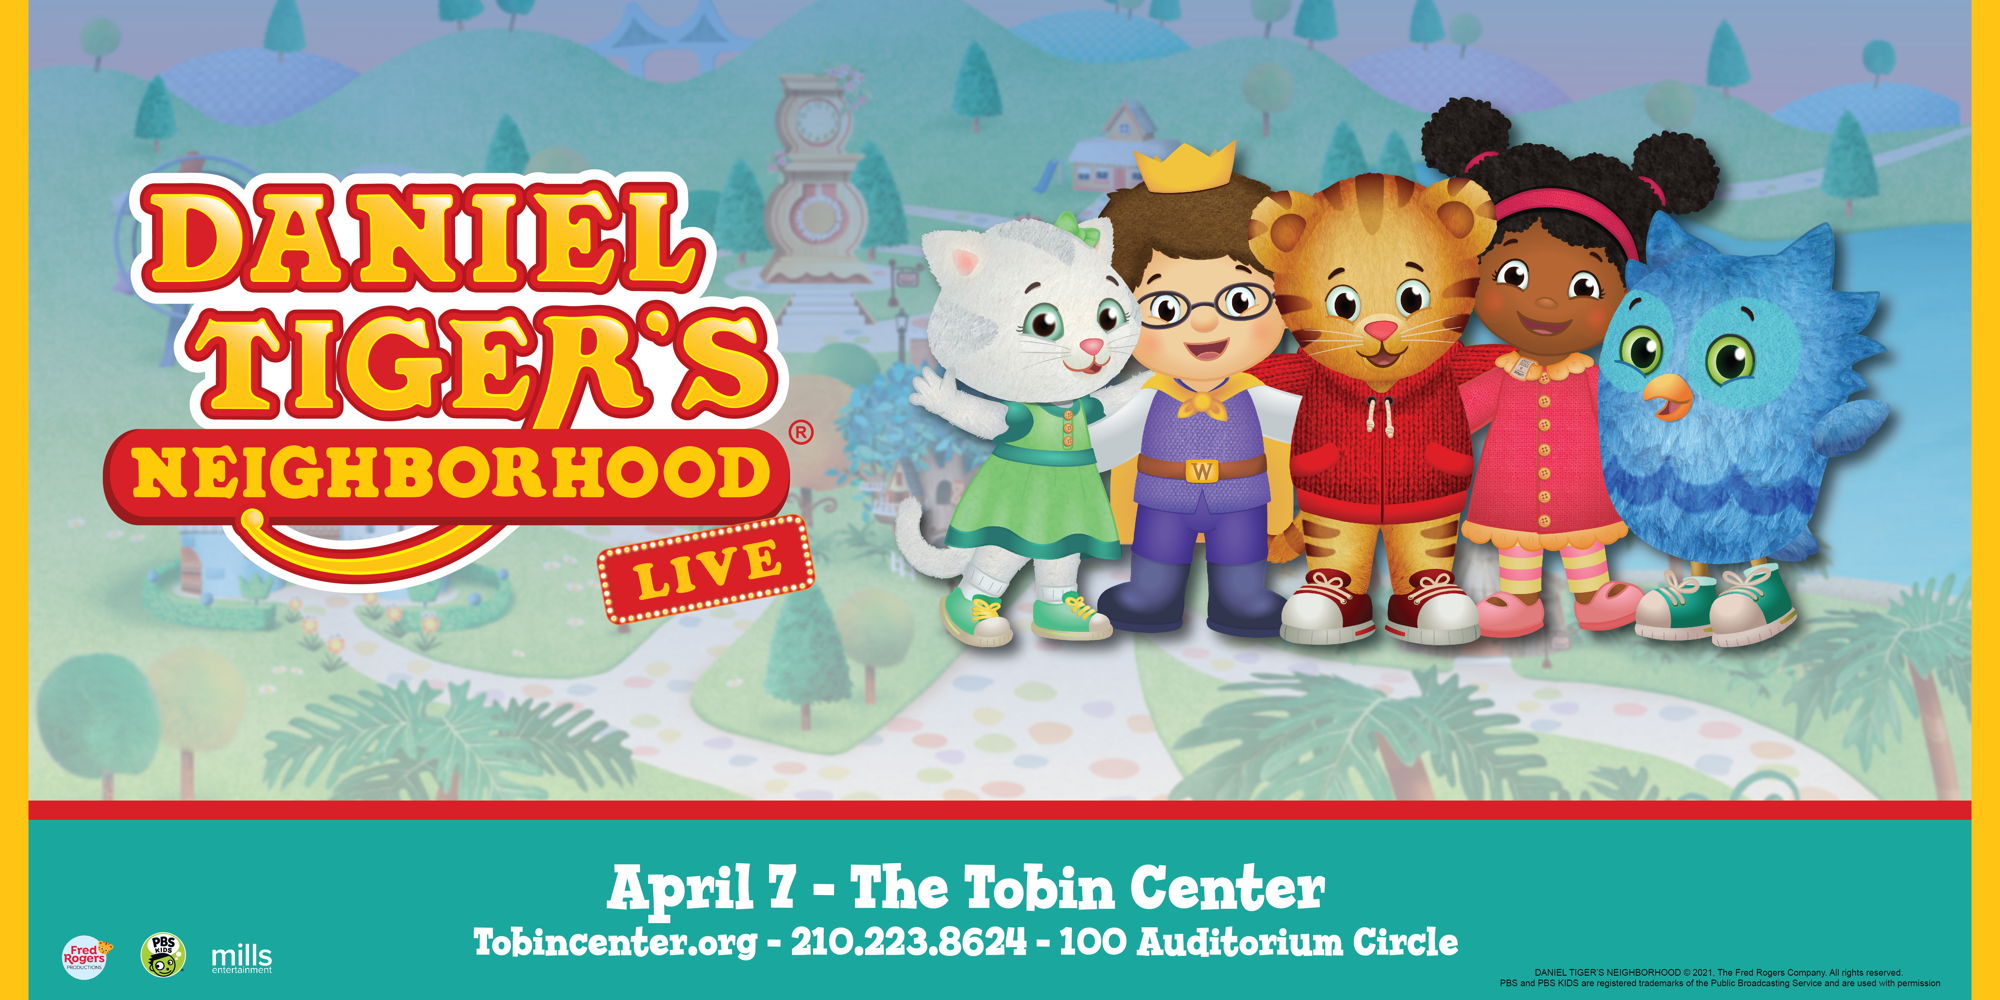 Daniel Tiger's Neighborhood LIVE! promotional image